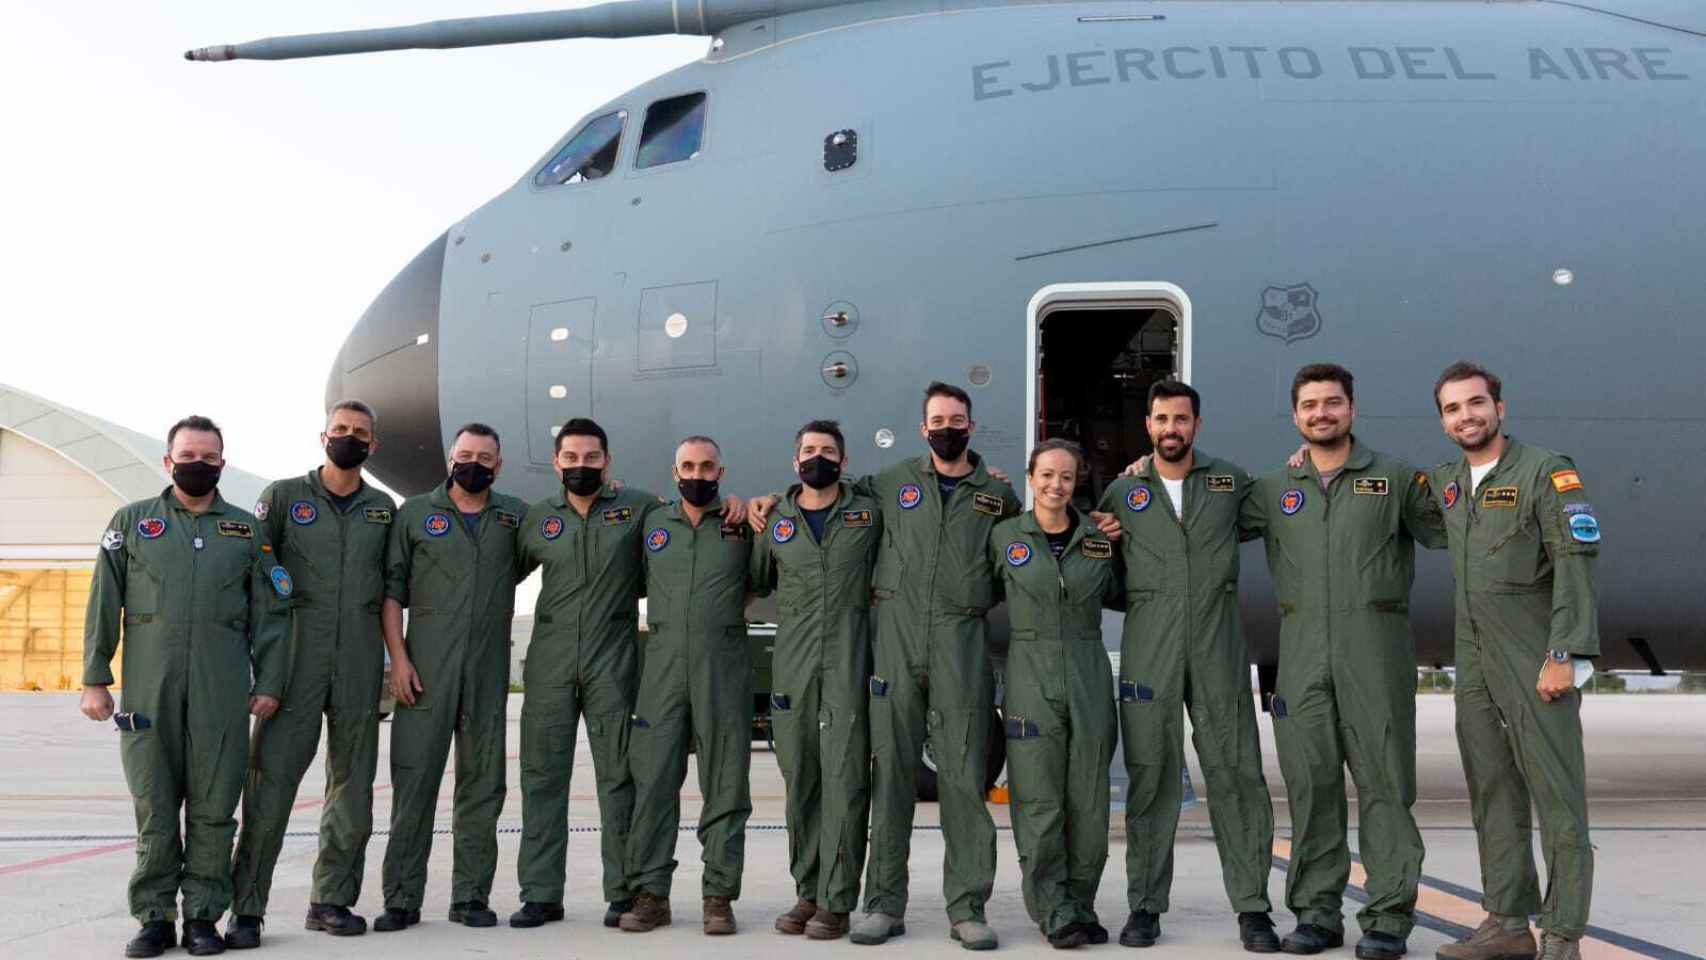 La capitán Zafra junto a sus compañeros del Ejército del Aire frente al A-400M.